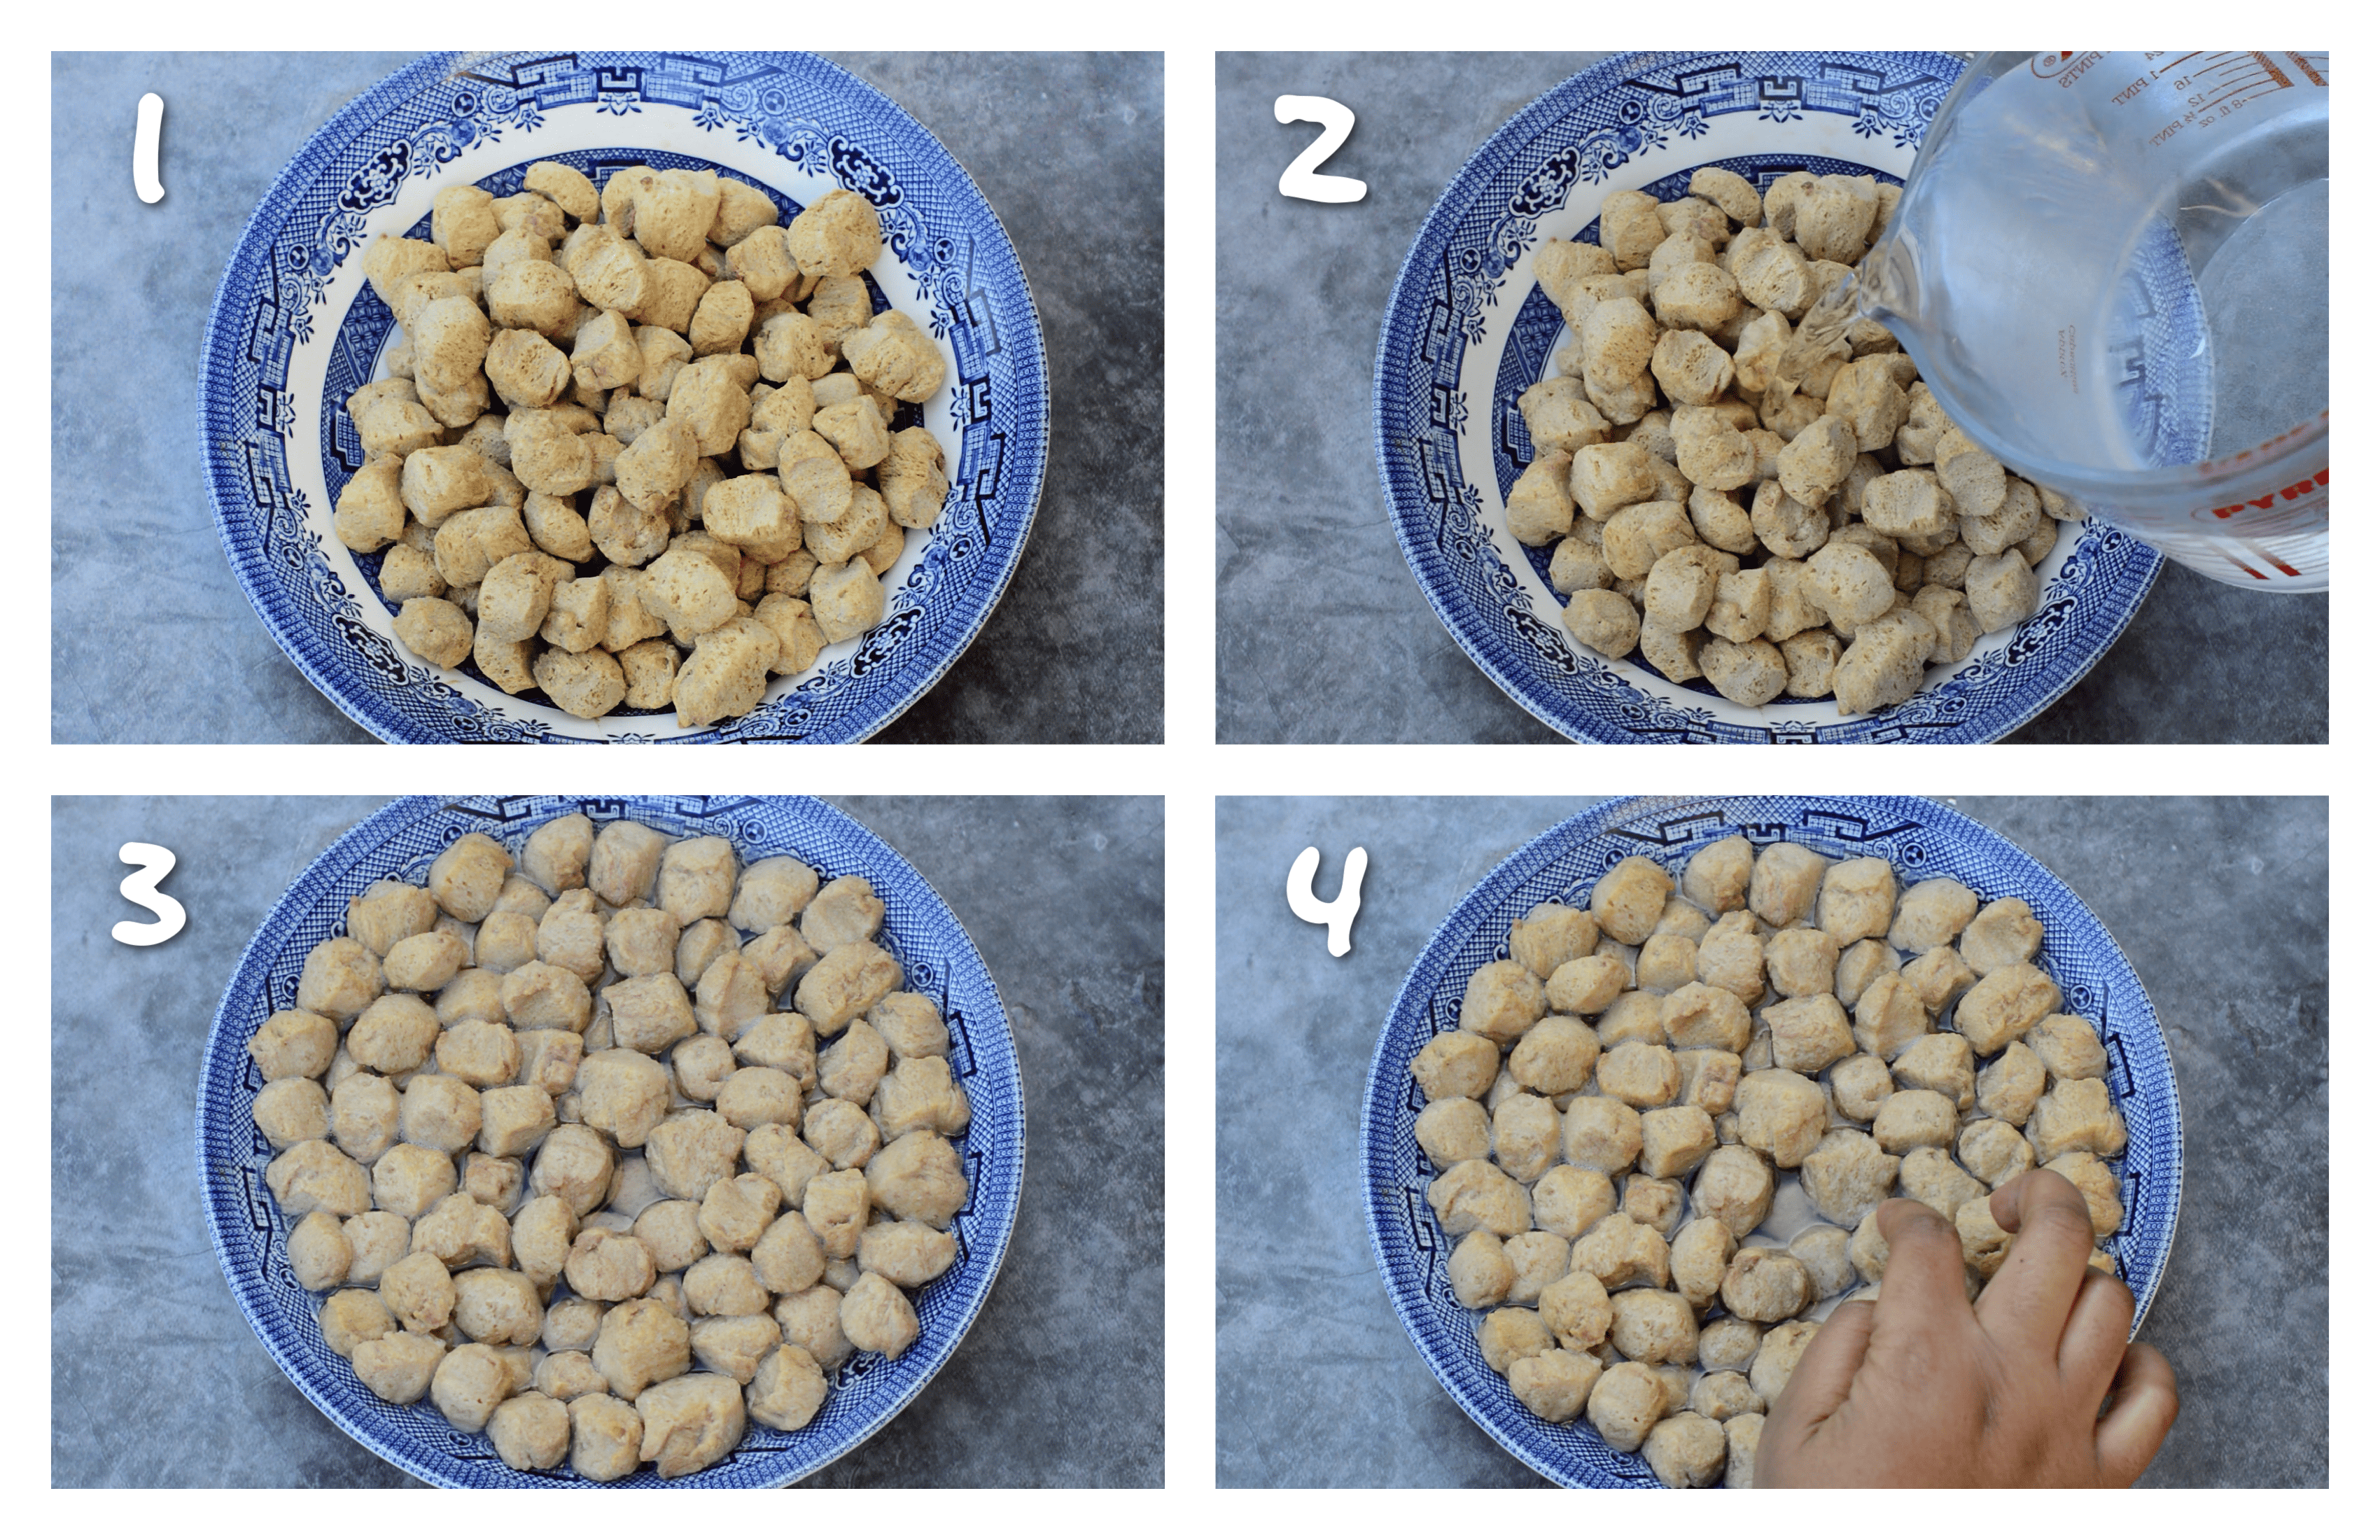 Steps 1-4 Rehydrating the soya chunks